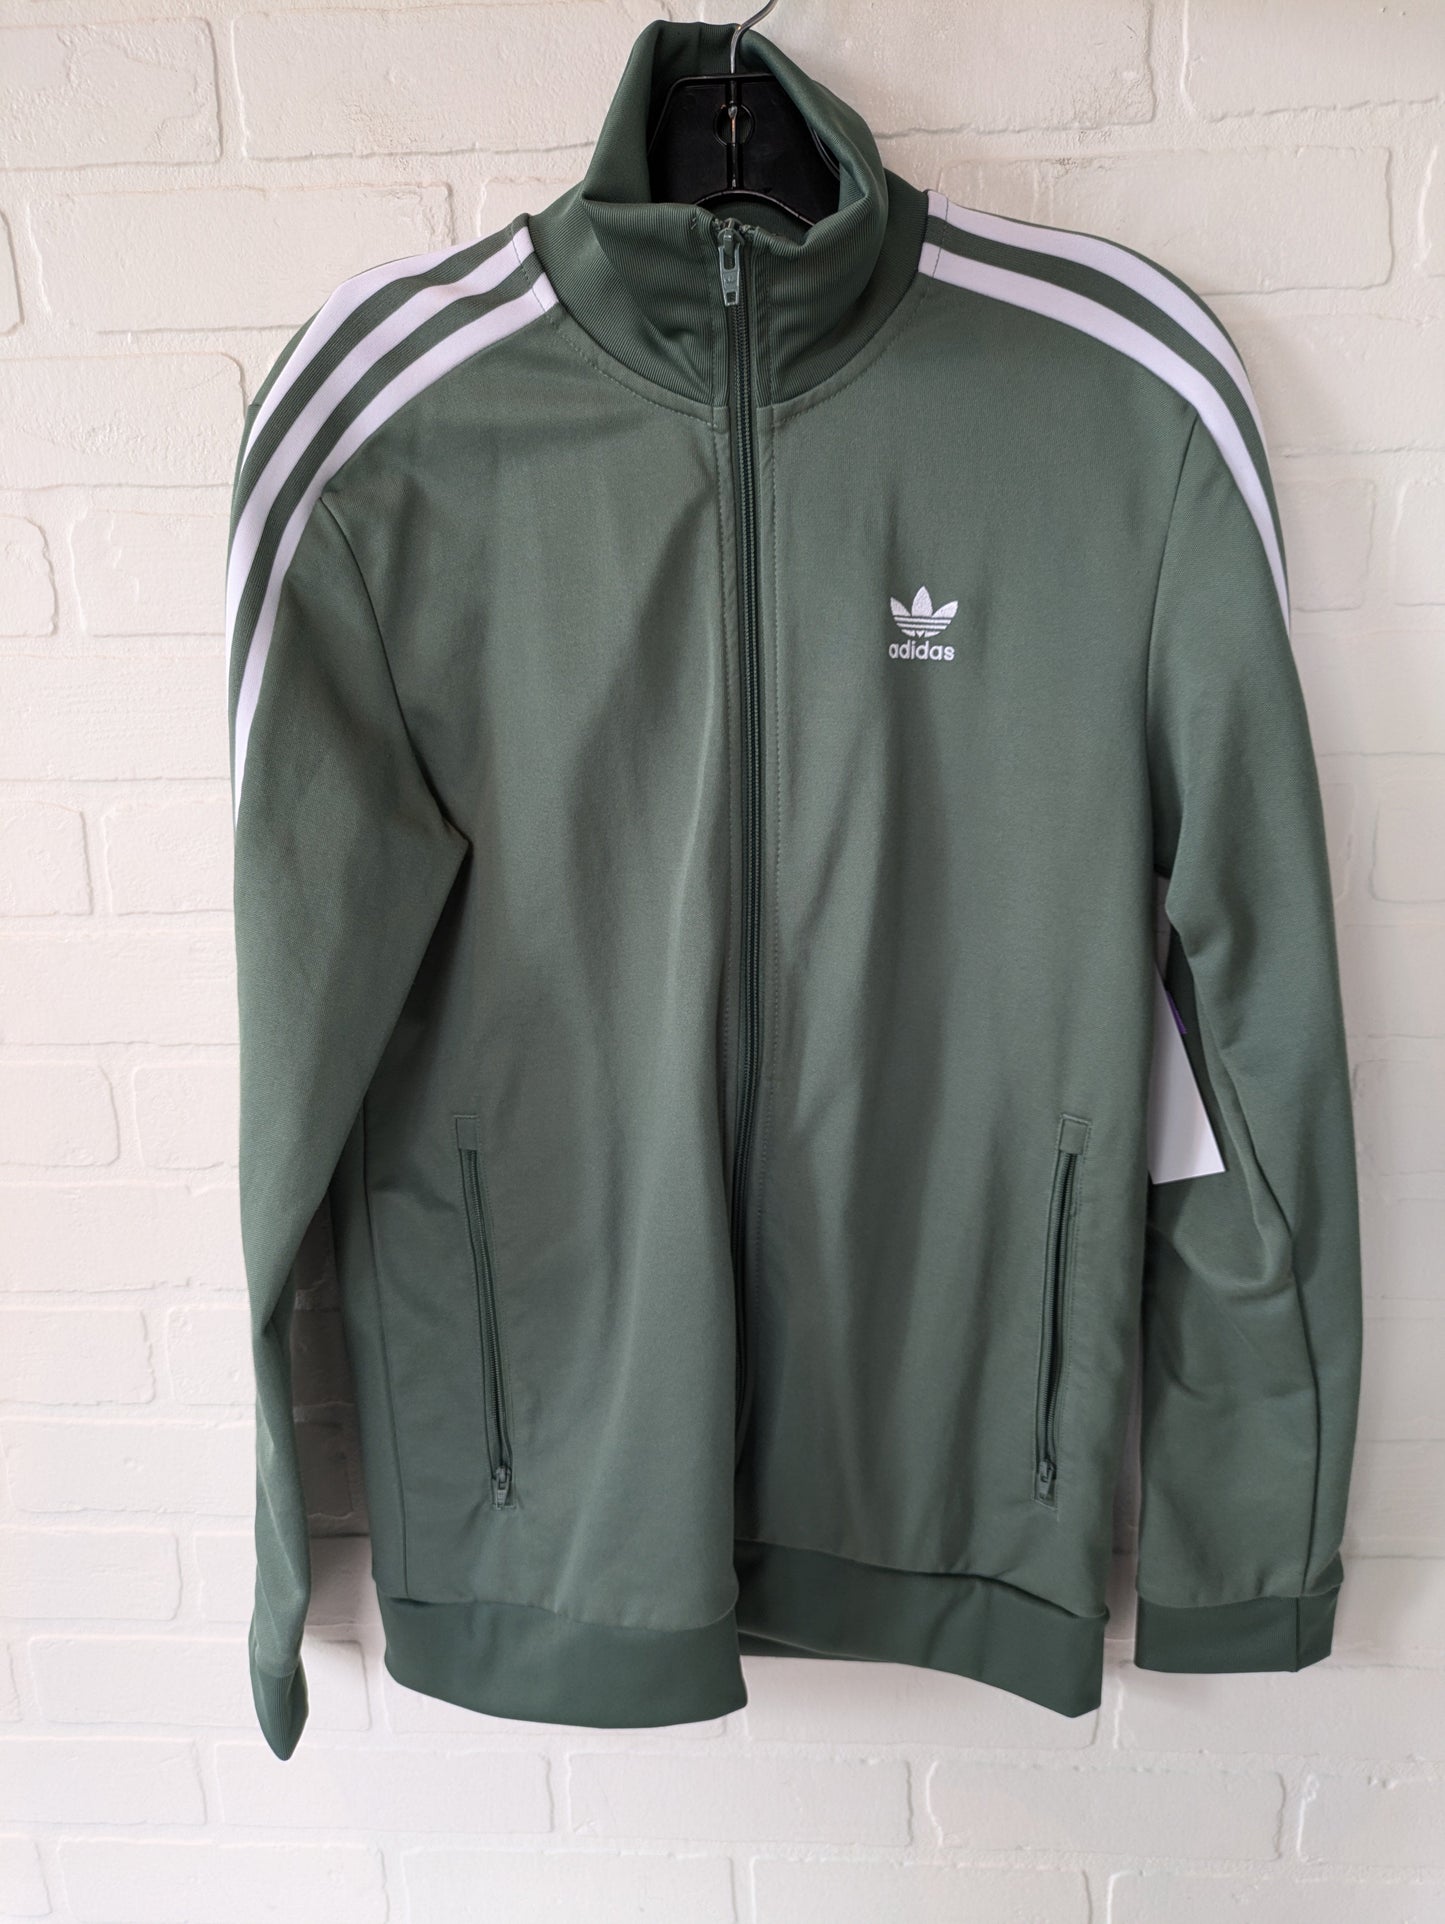 Green Athletic Jacket Adidas, Size S